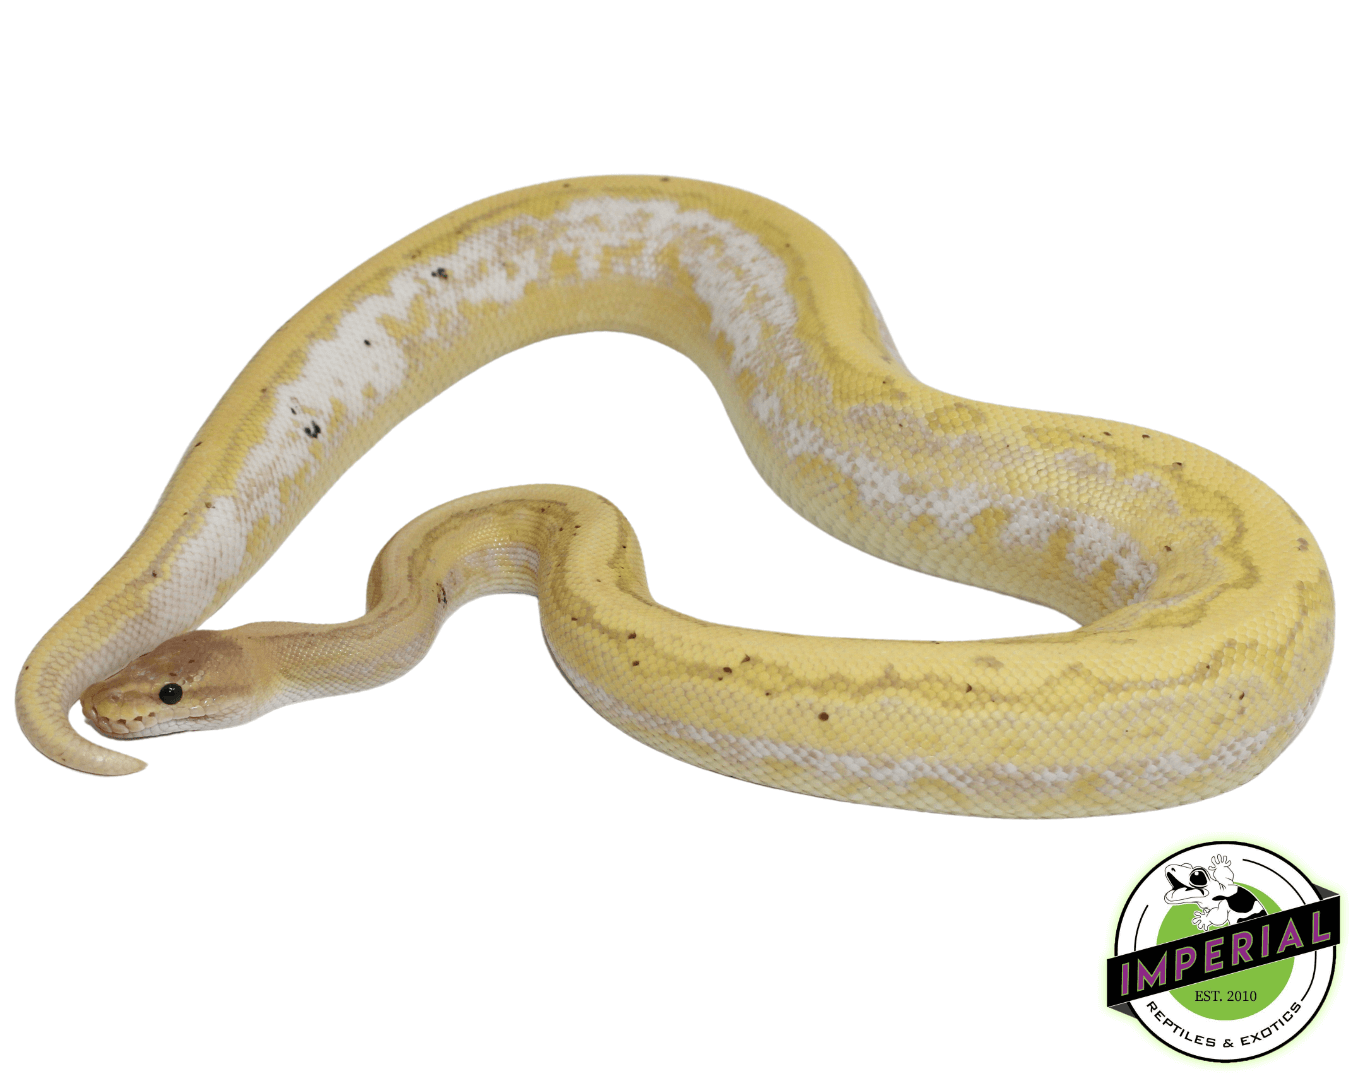 Banana Calico Pinstripe Cinnamon Yellowbelly ball python for sale, buy reptiles online